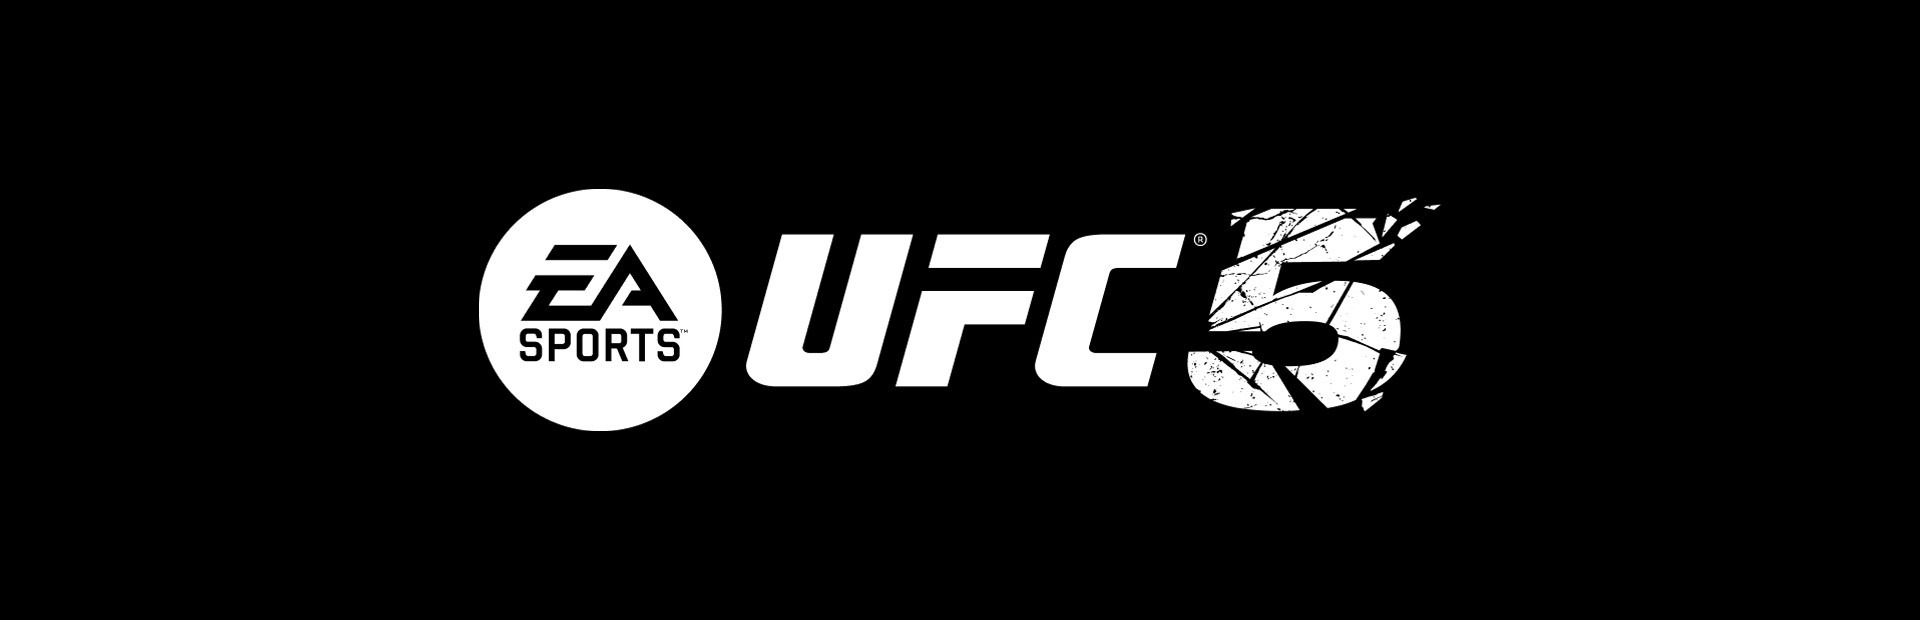 EA Sports UFC 5 Xbox Series X|S